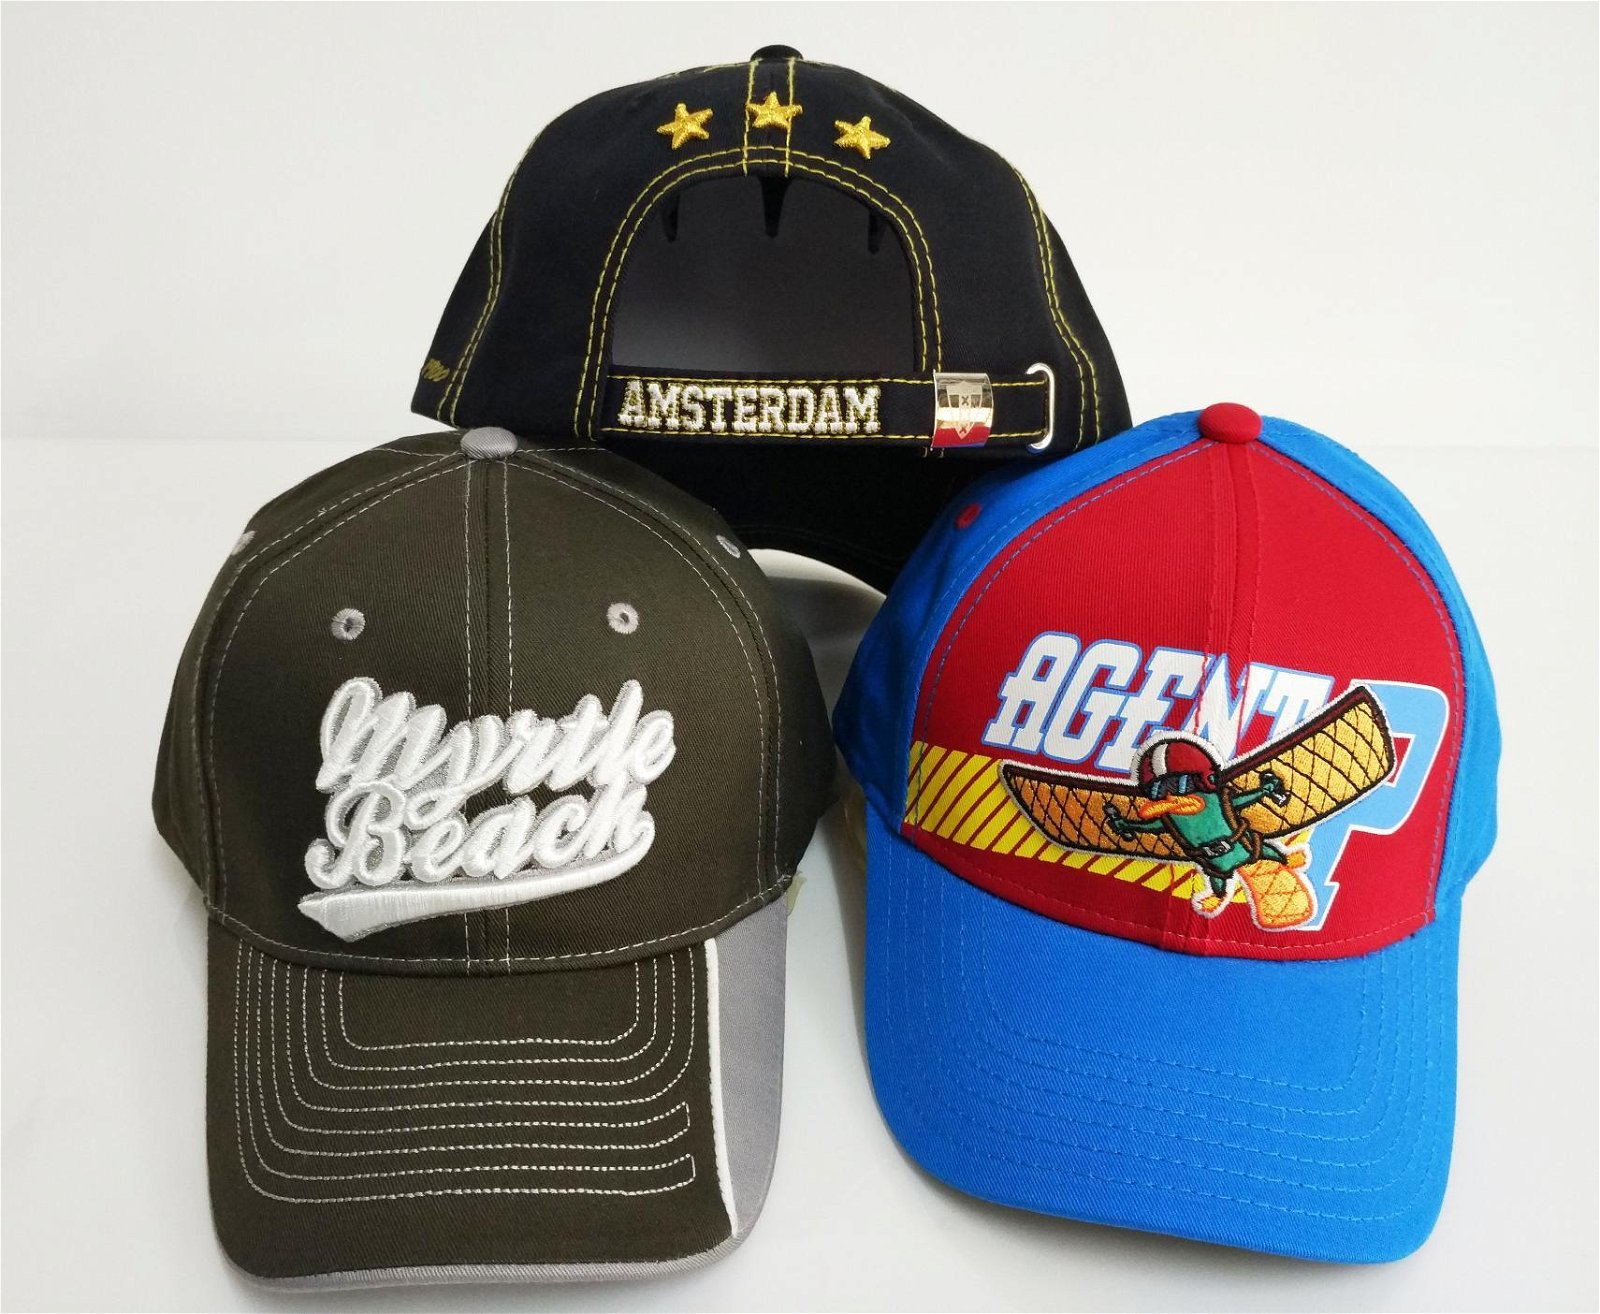 Fashion Gorros Baseball Jockey Caps - DSCF-587C (China Manufacturer) -  Sports Caps - Hat & Cap Products - DIYTrade China manufacturers